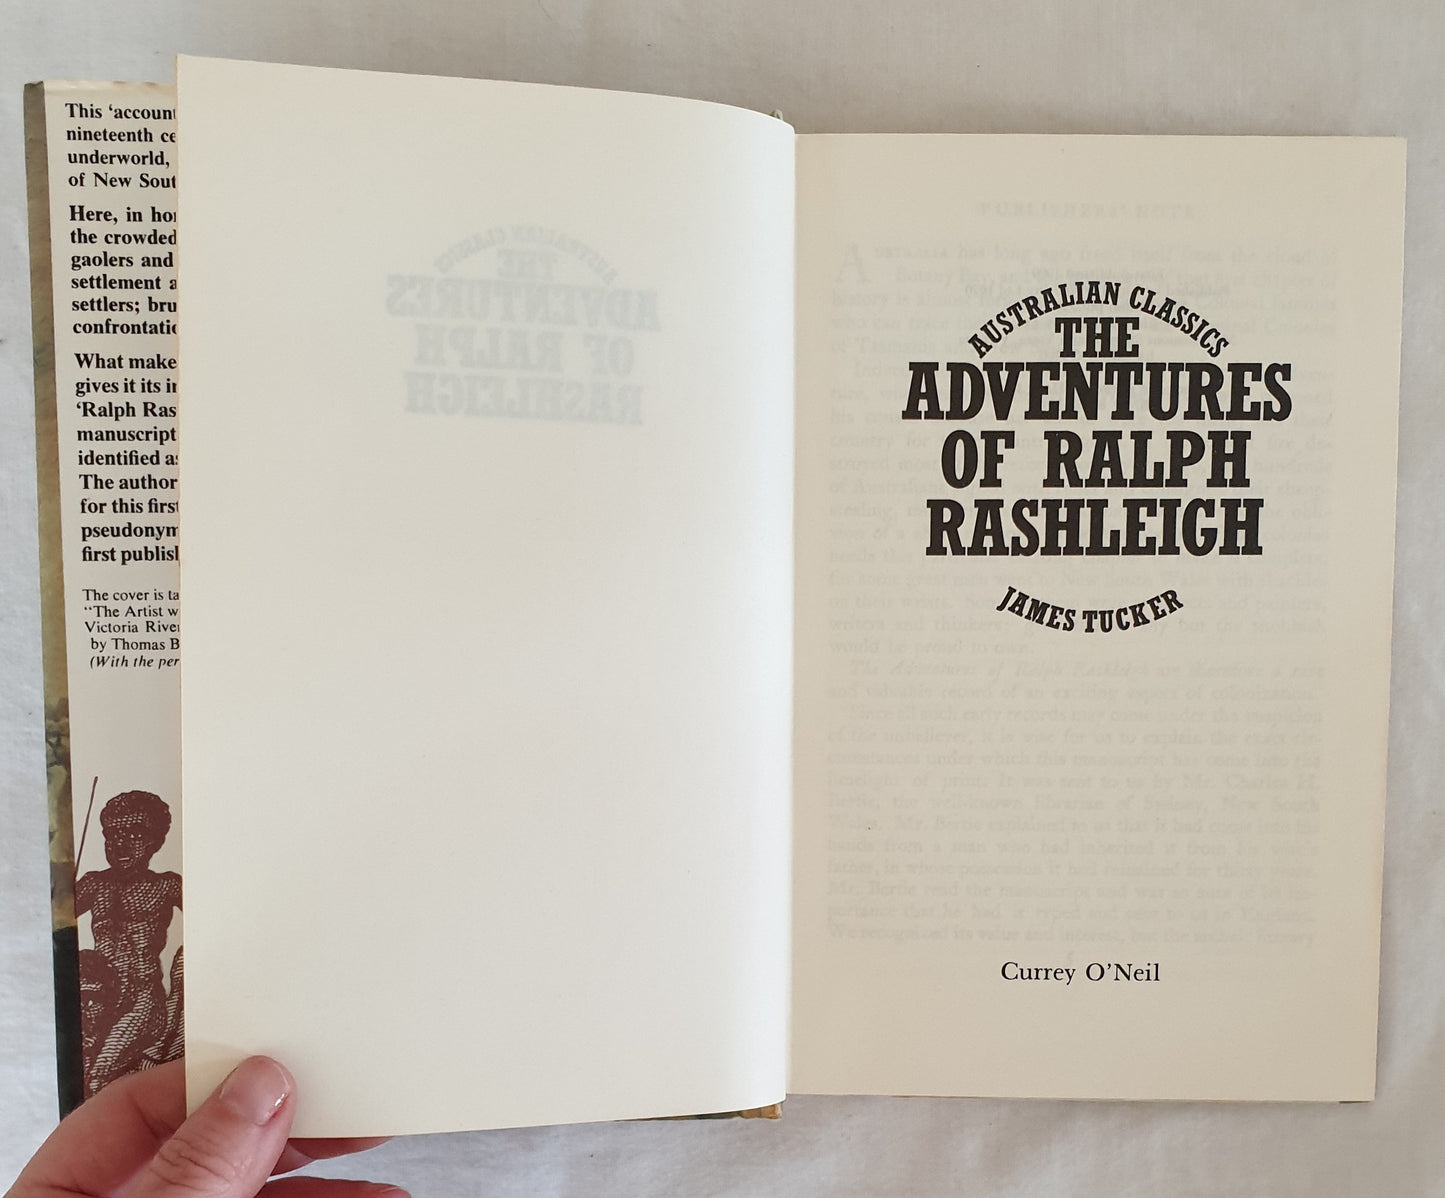 The Adventures of Ralph Rashleigh by James Tucker